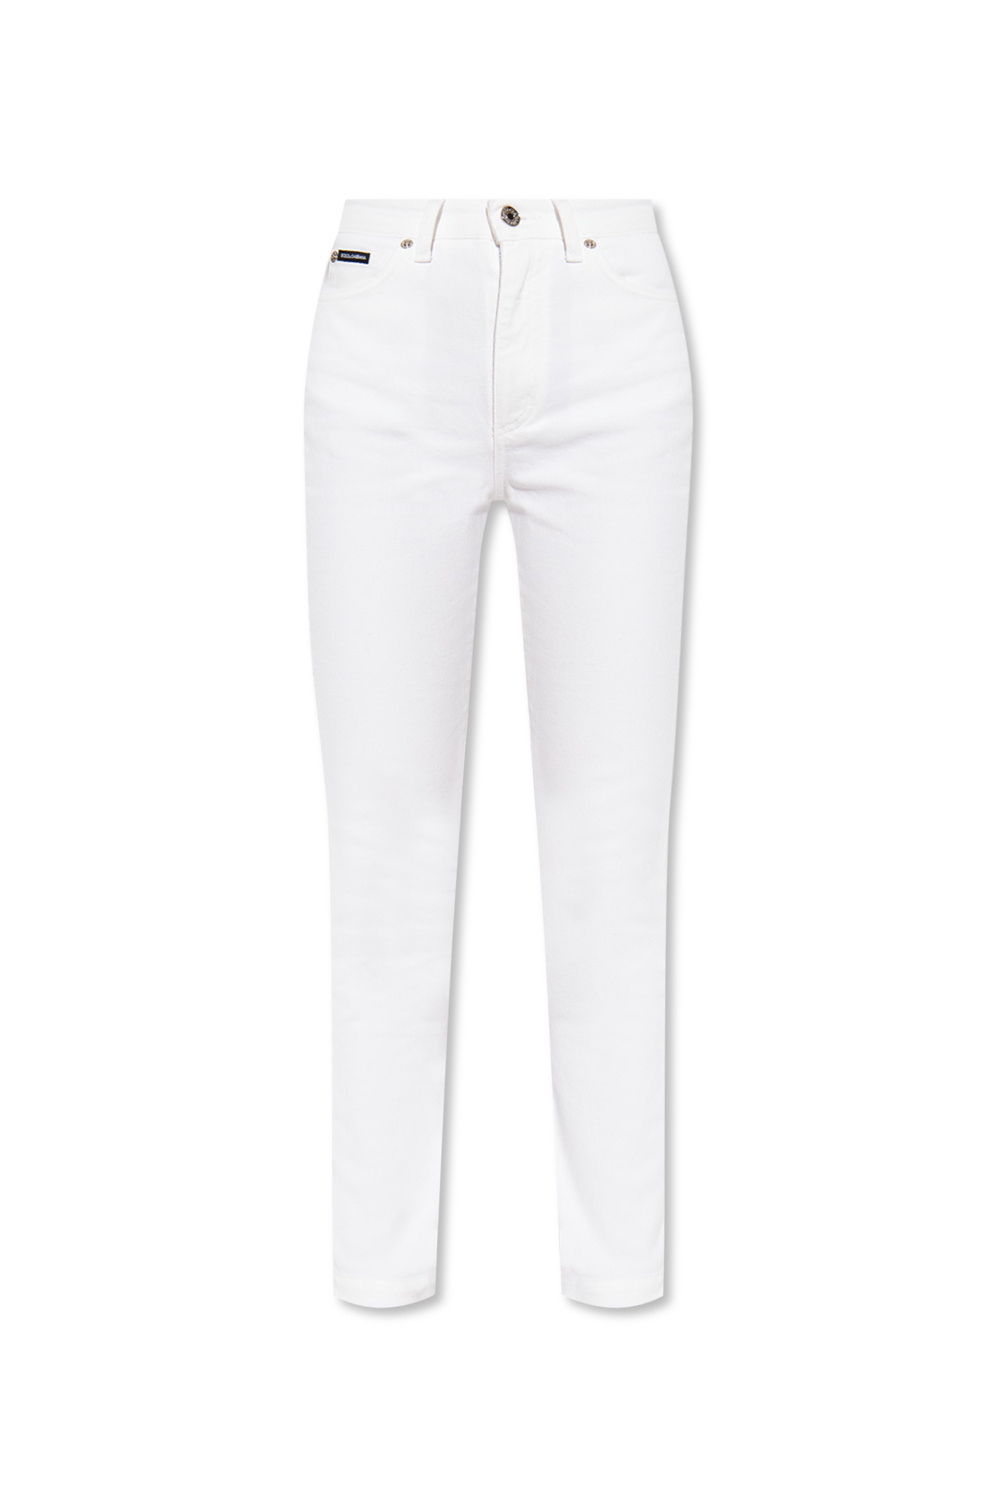 Dolce & Gabbana ‘Audrey’ jeans